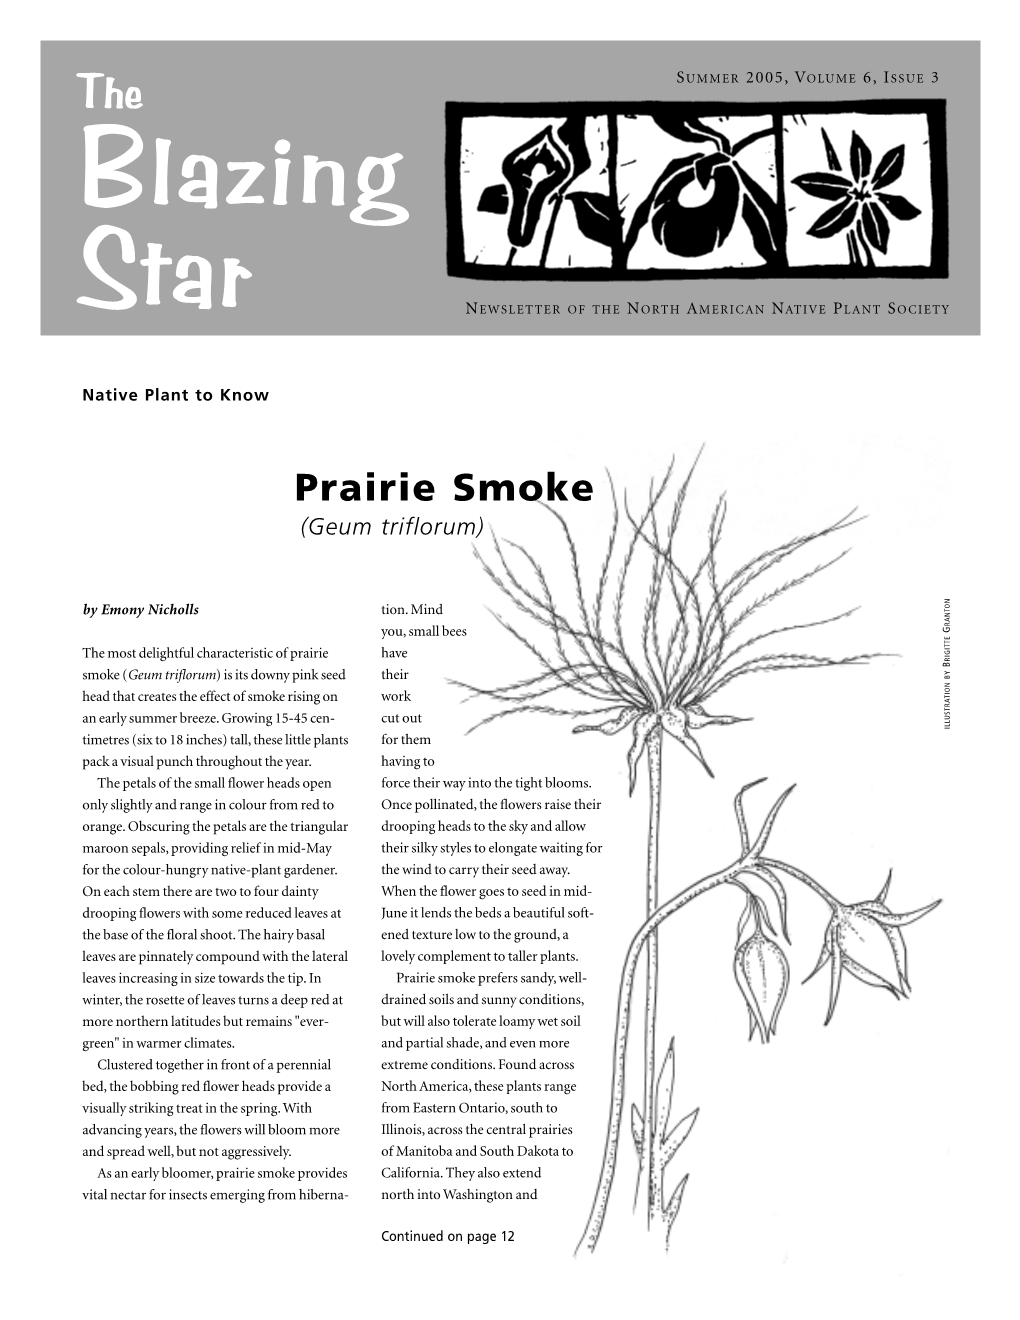 Prairie Smoke (Geum Triflorum)